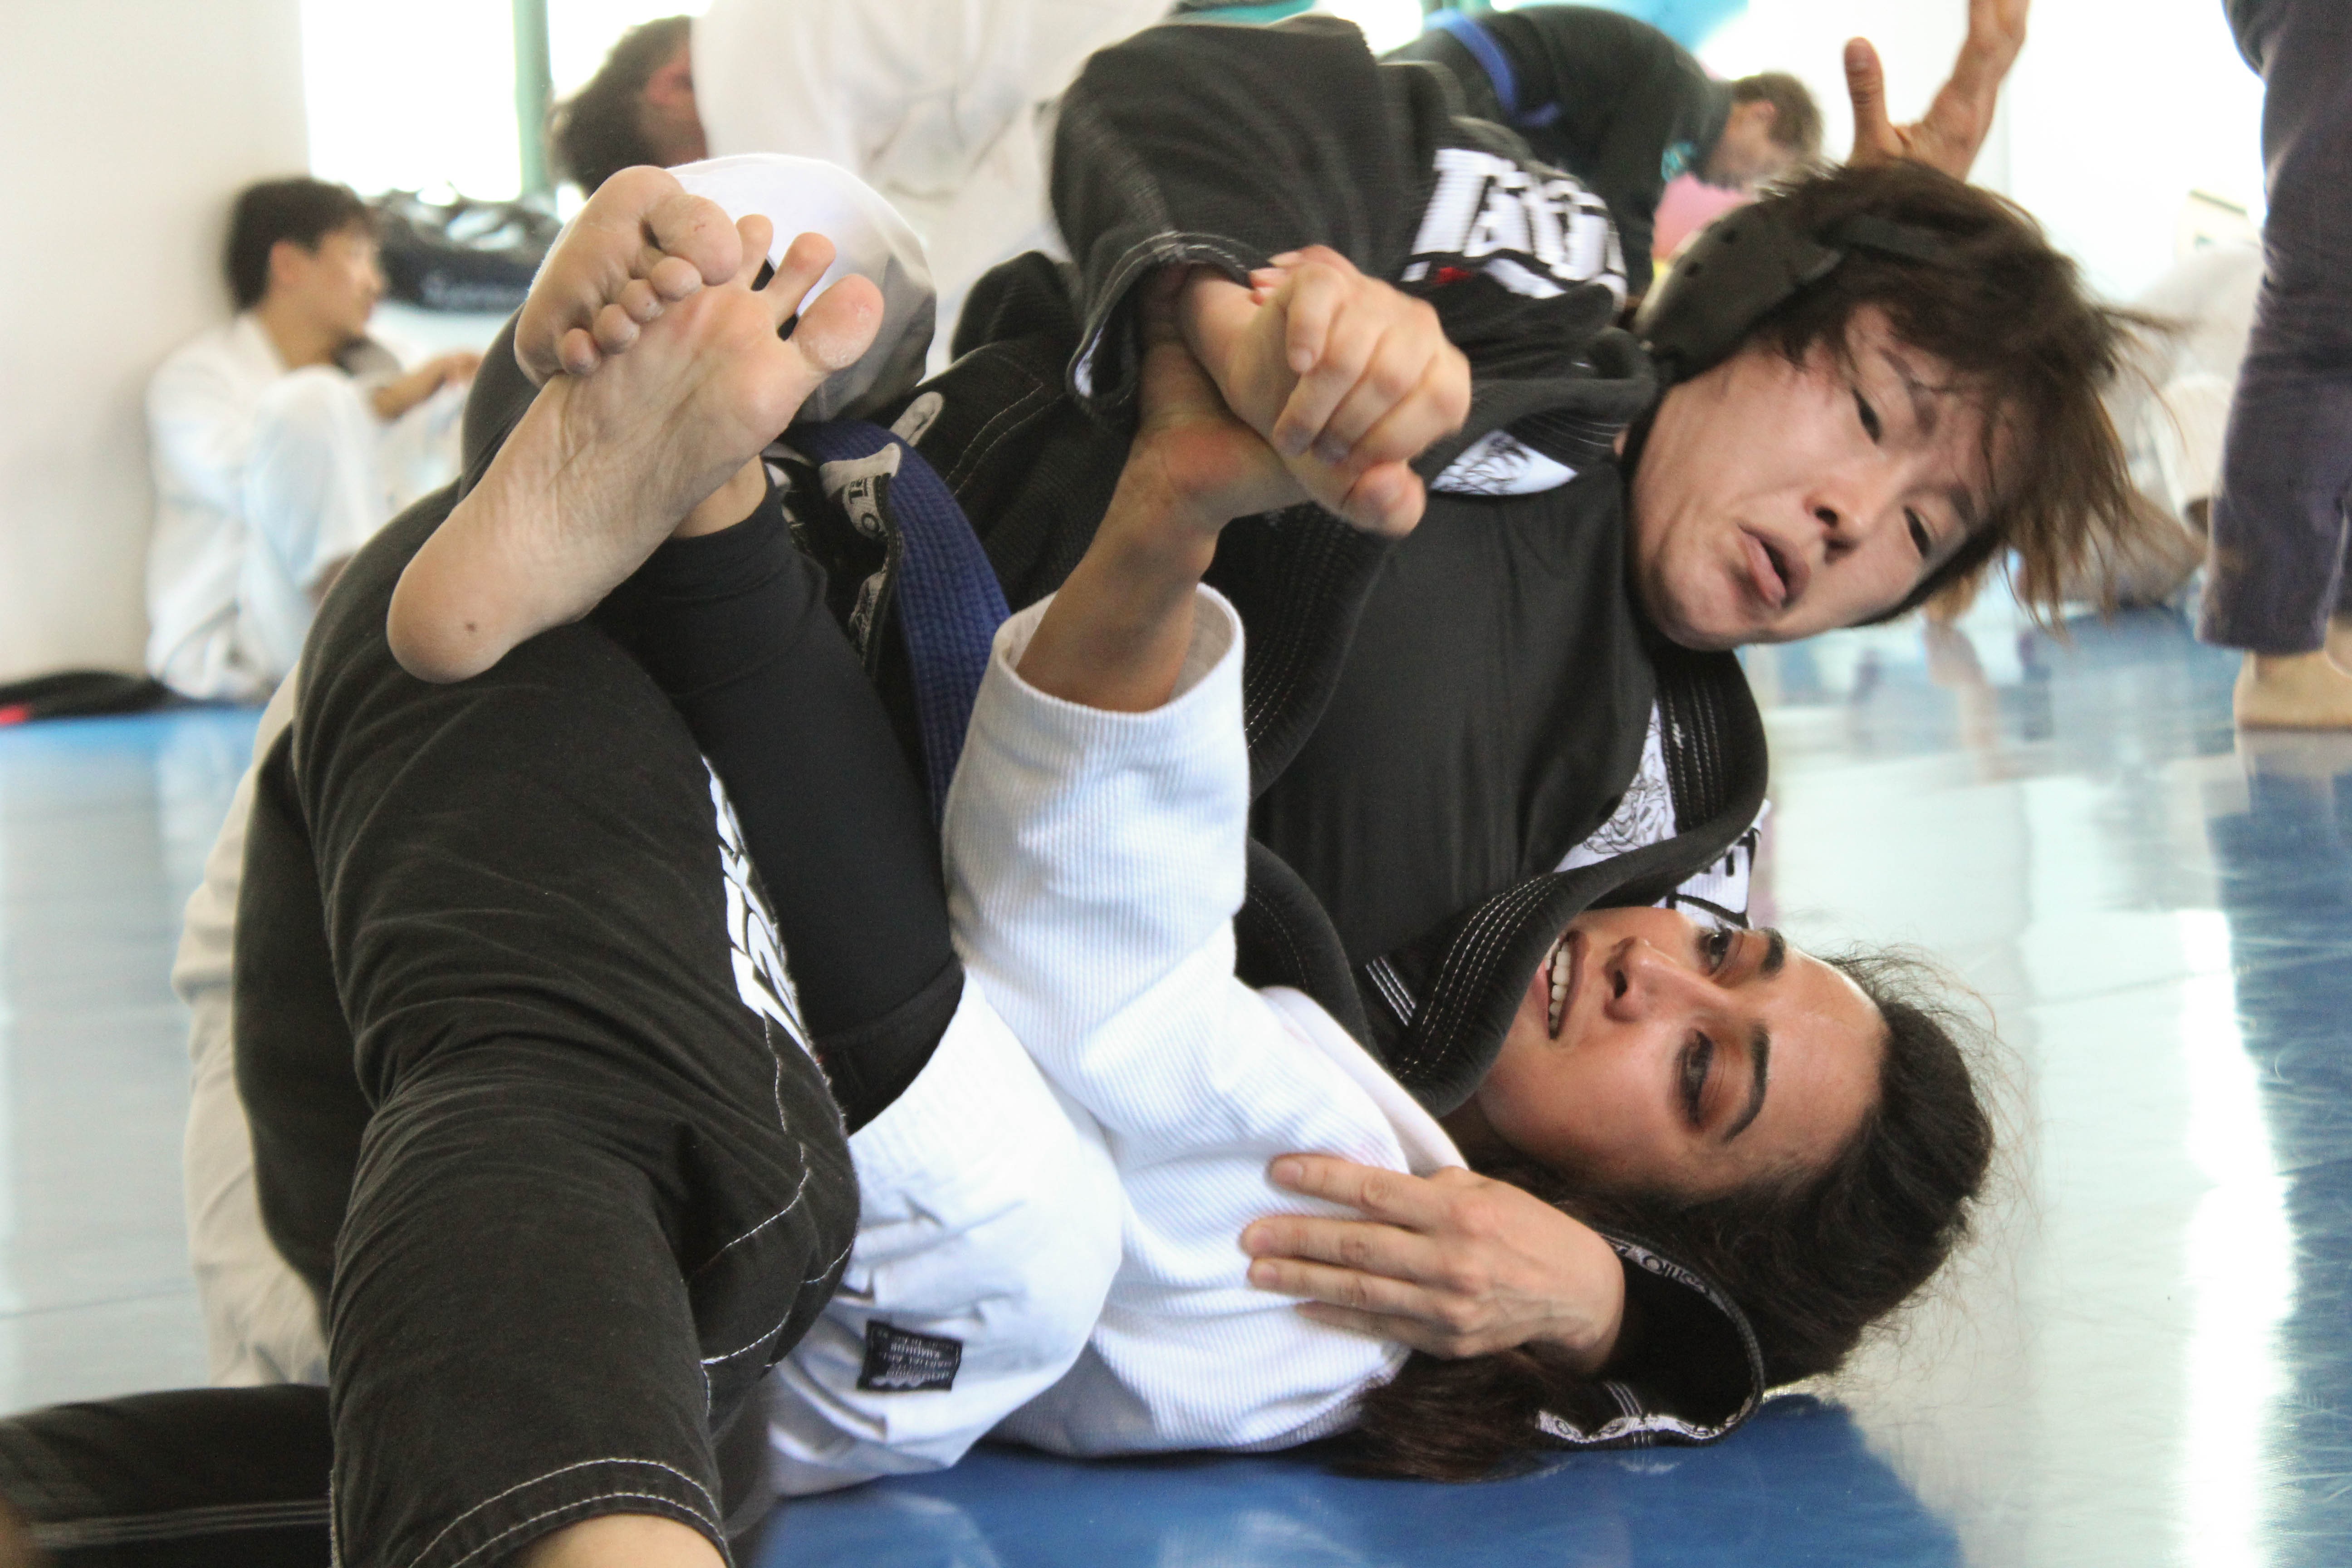 Brazilian jiu-jitsu brown belt Nilofer Mallick (bottom), an airline pilot living in Seoul, grappling with an opponent. Photo: Courtesy of Nilofer Mallick